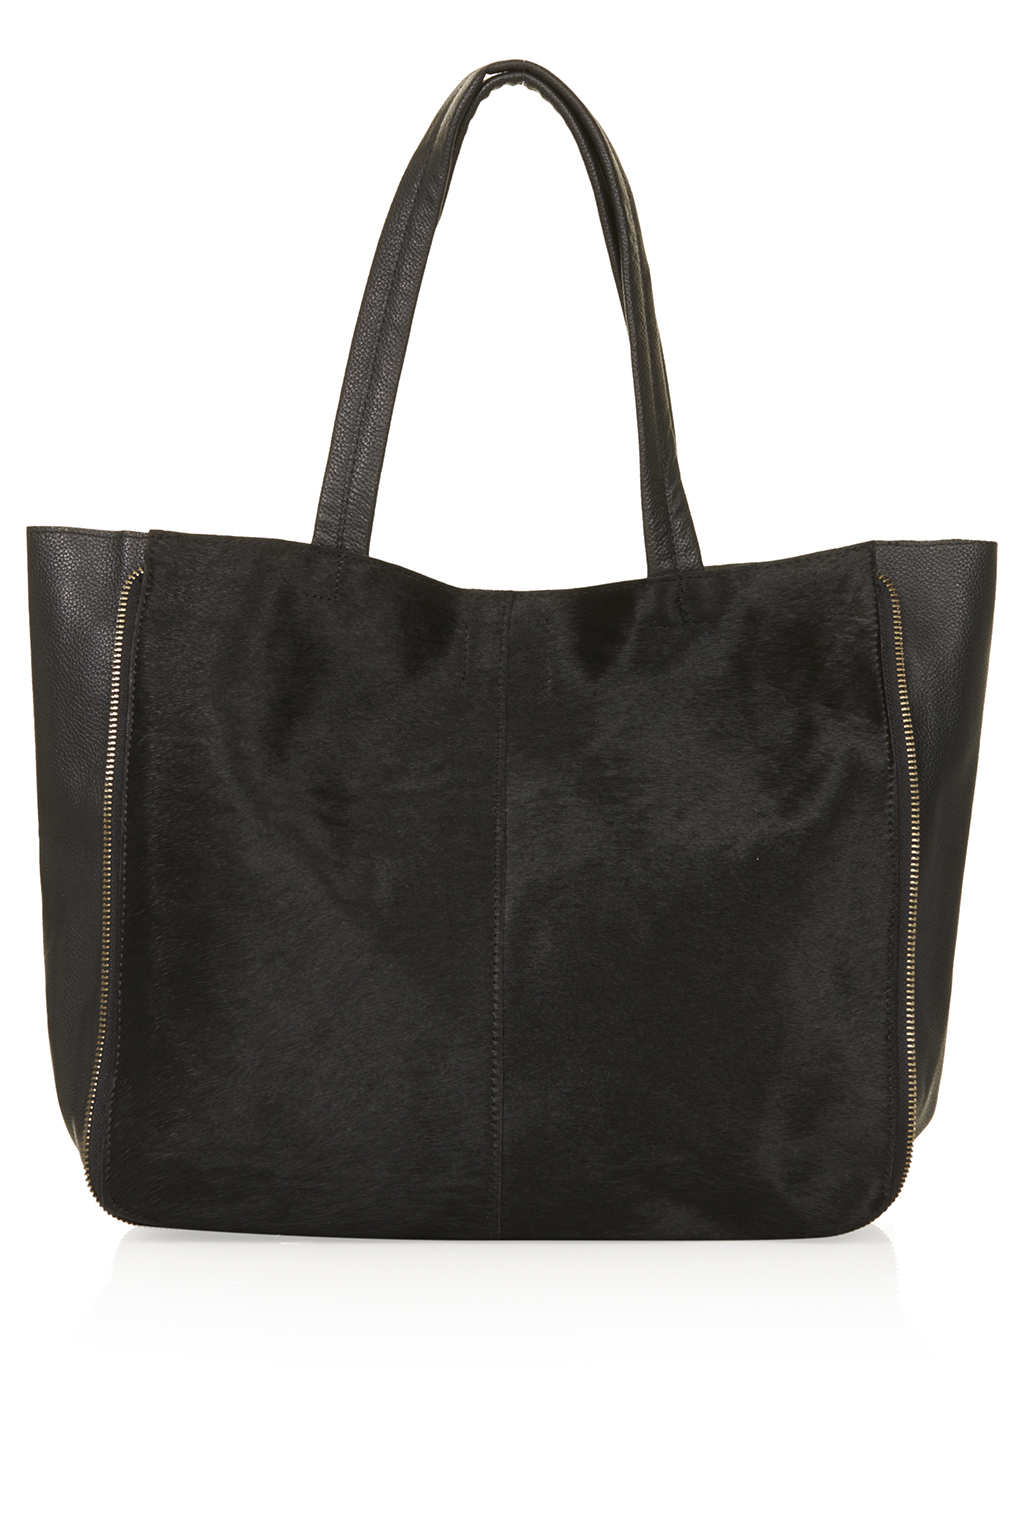 Lyst - Topshop Ponyhair Shopper Bag in Black